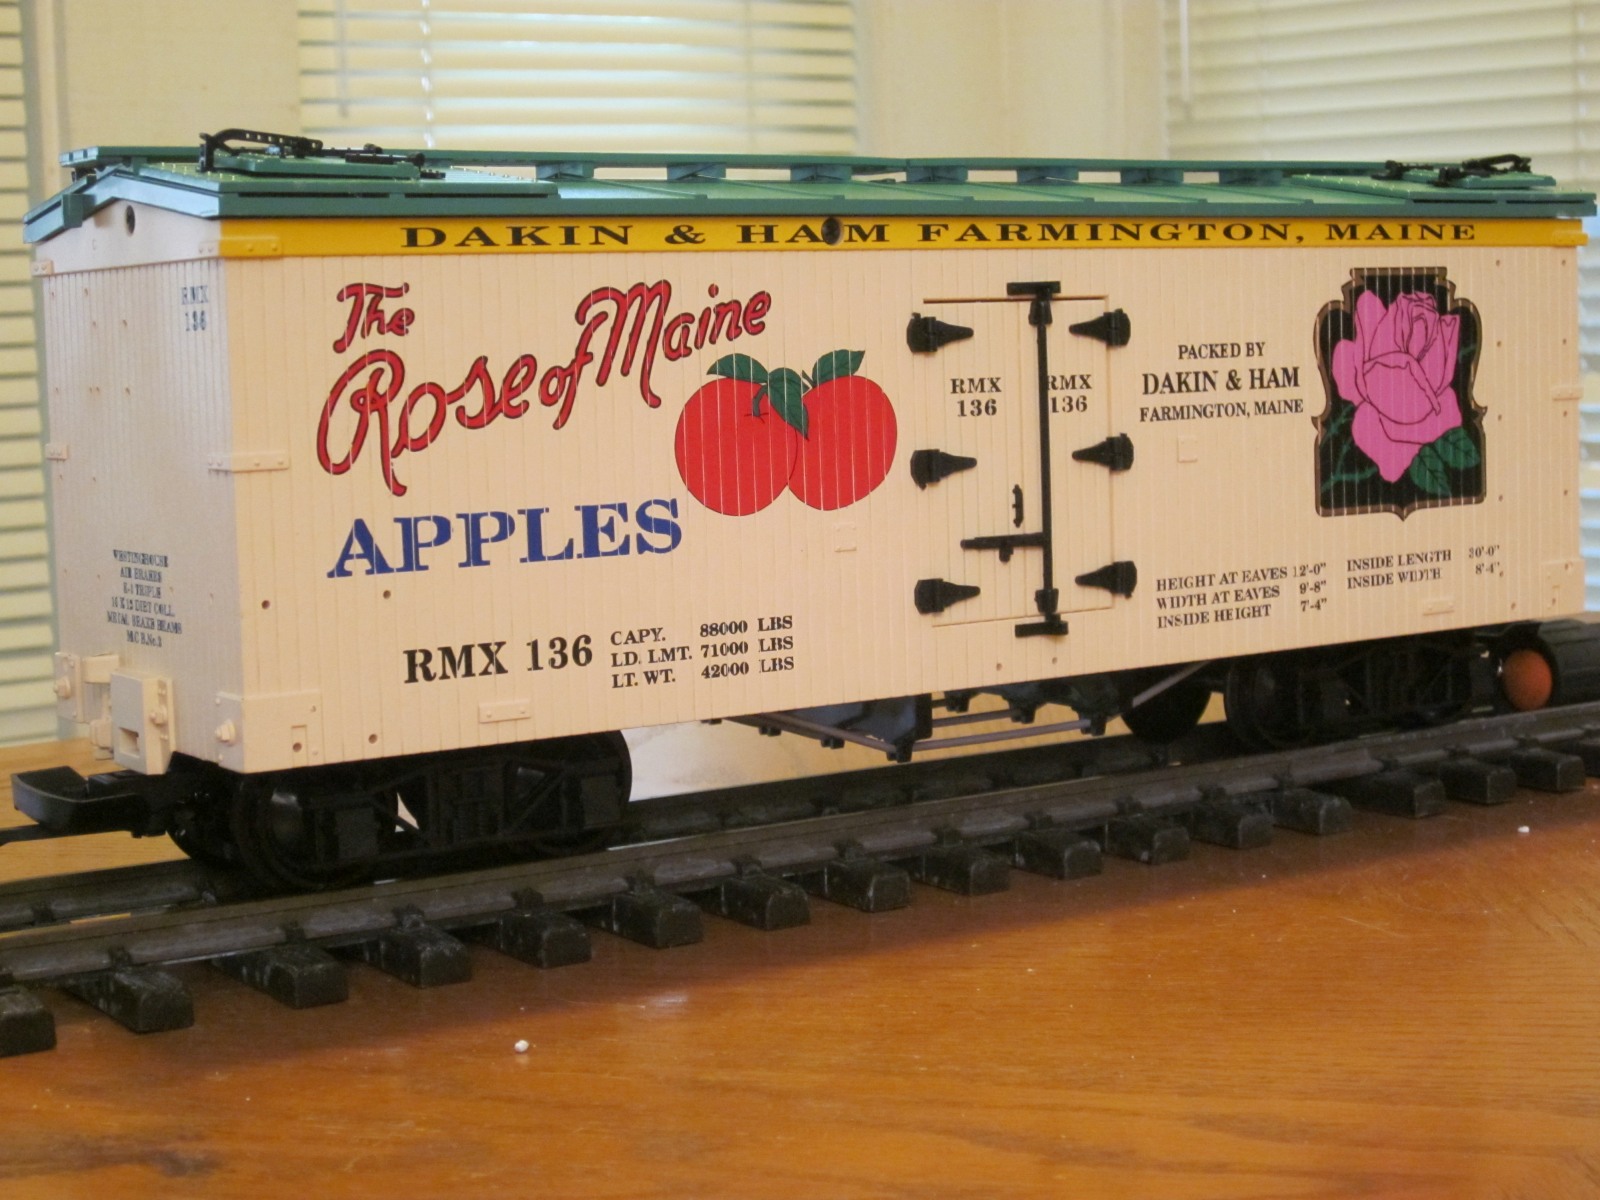 R16274 Rose Of Maine Apples RMX 136